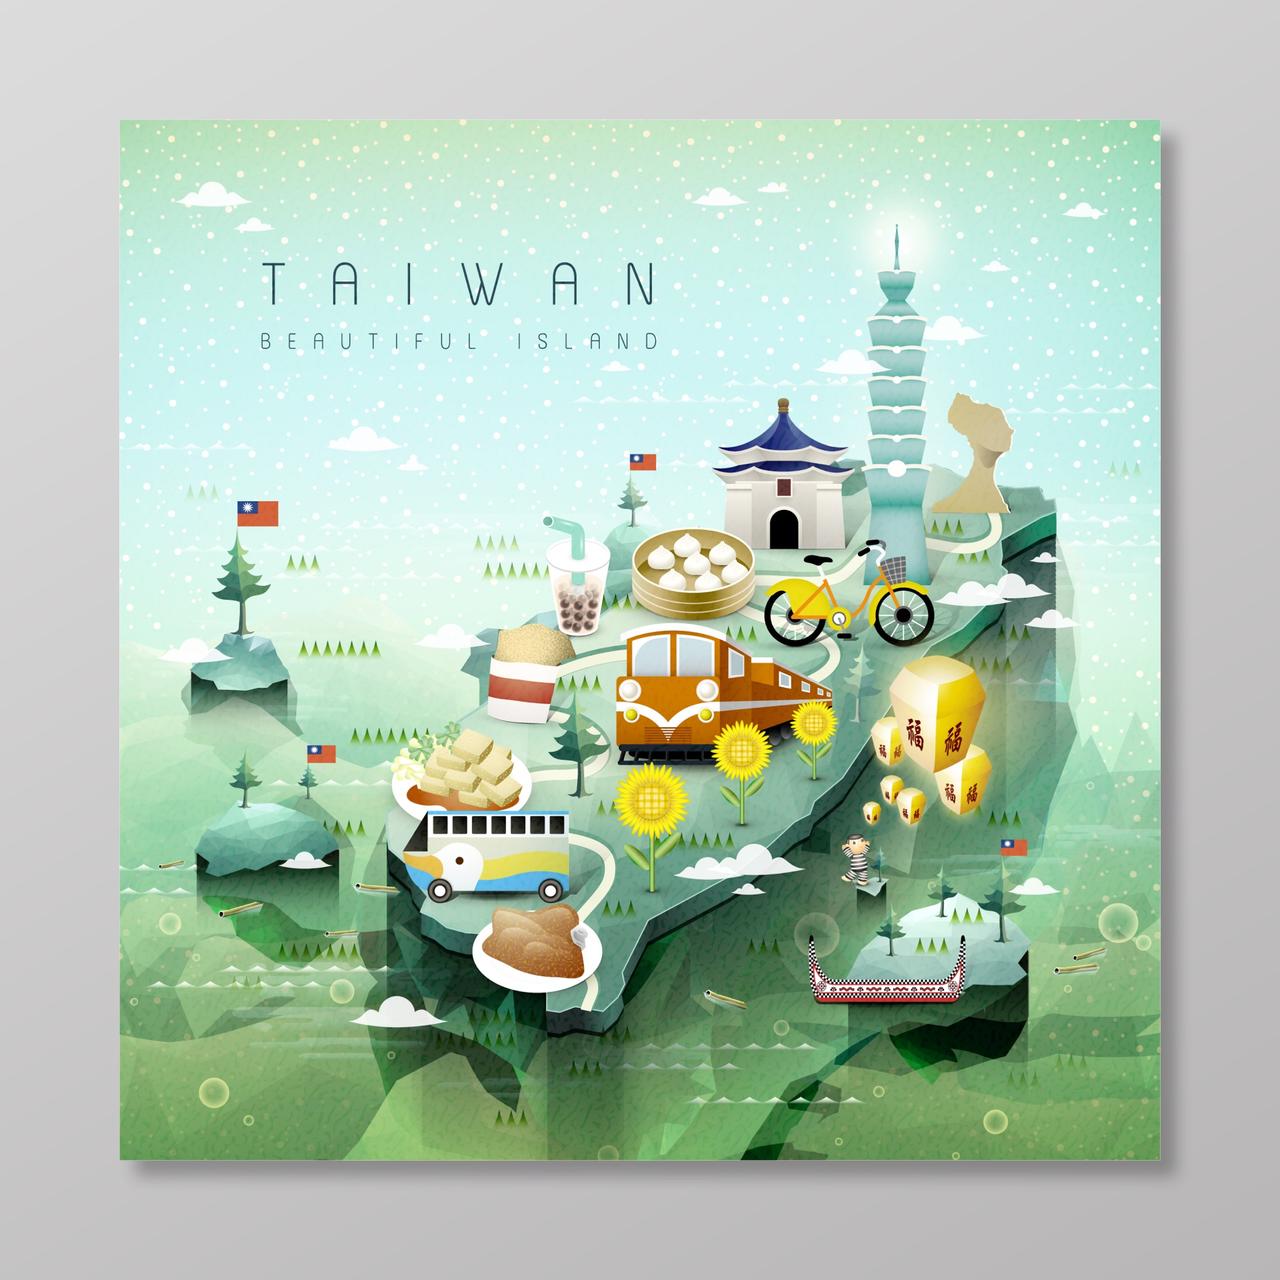 台湾旅游梦幻插画设计